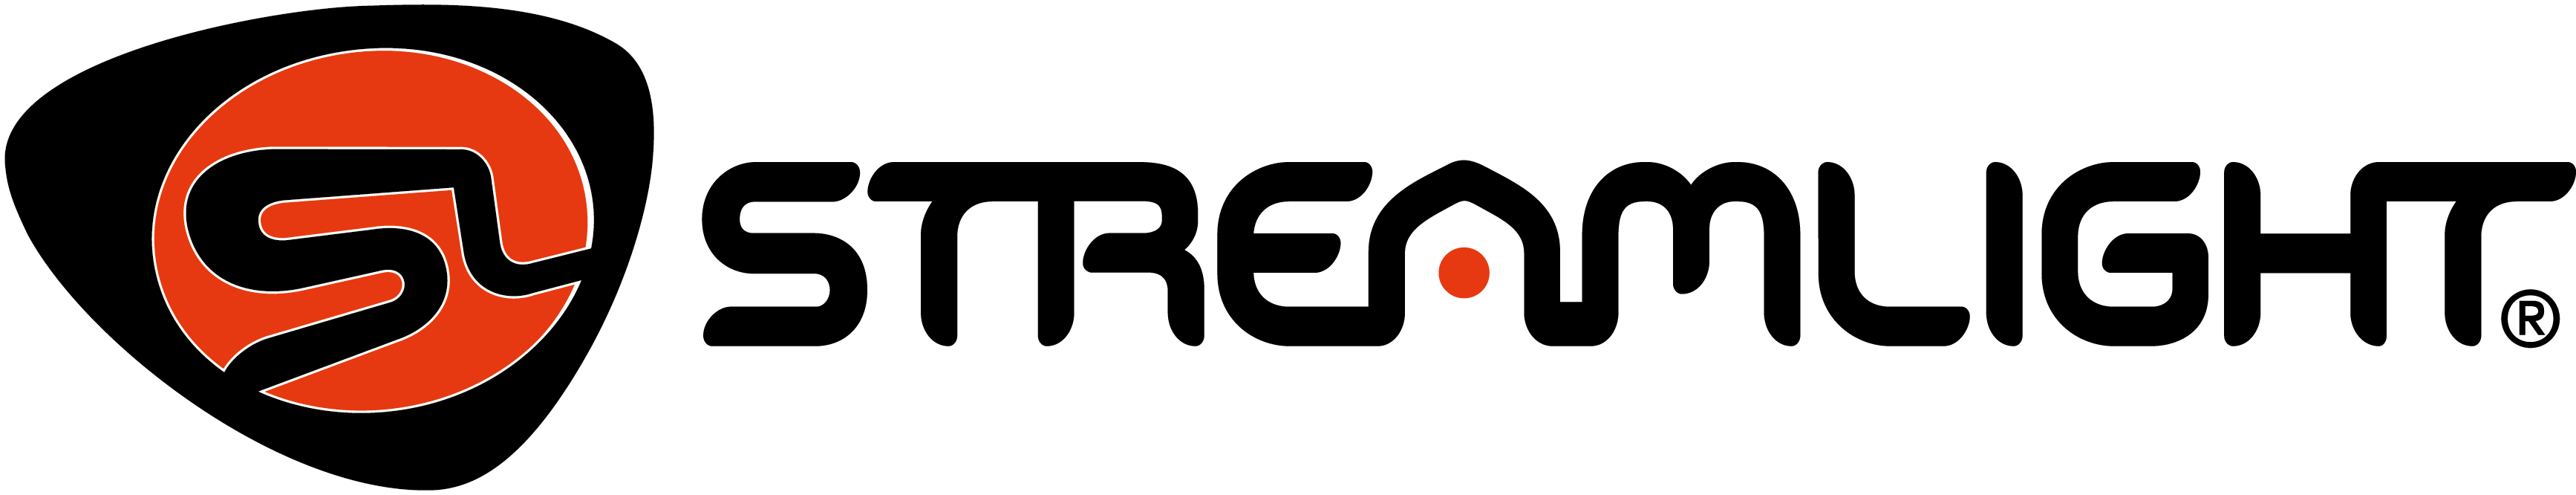 Logo_Streamlight-noTag_4c-black.png